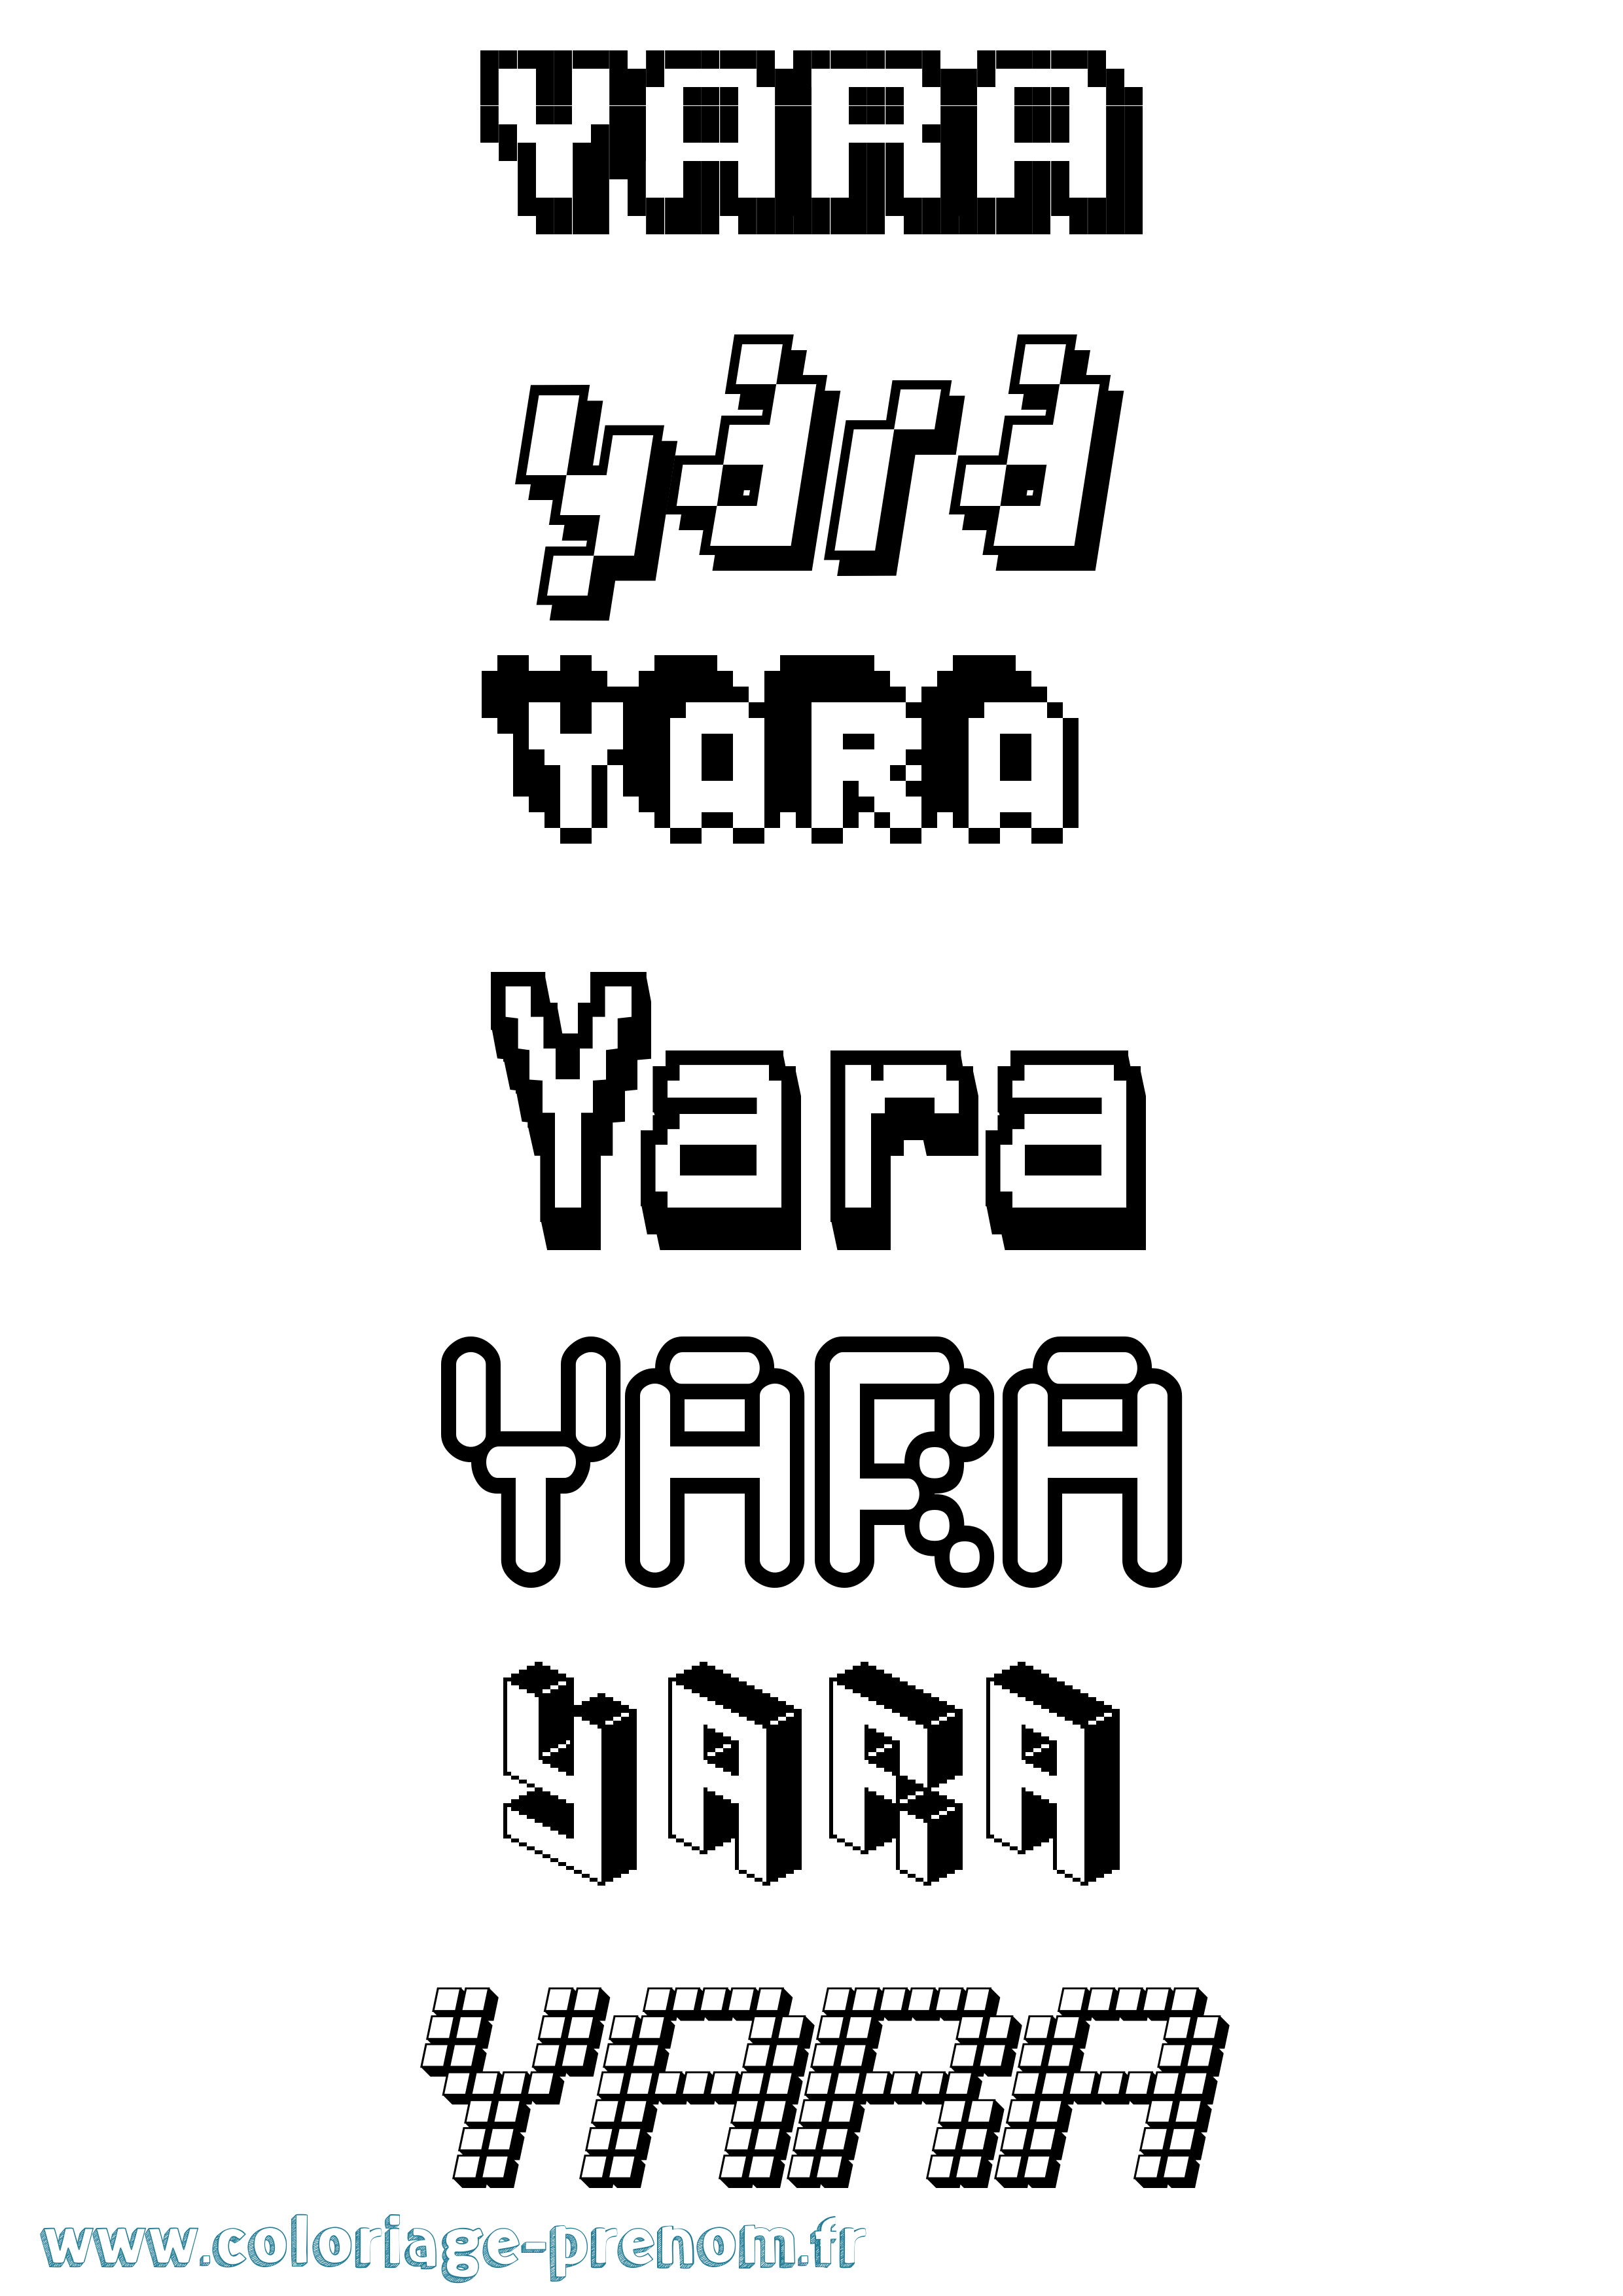 Coloriage prénom Yara Pixel